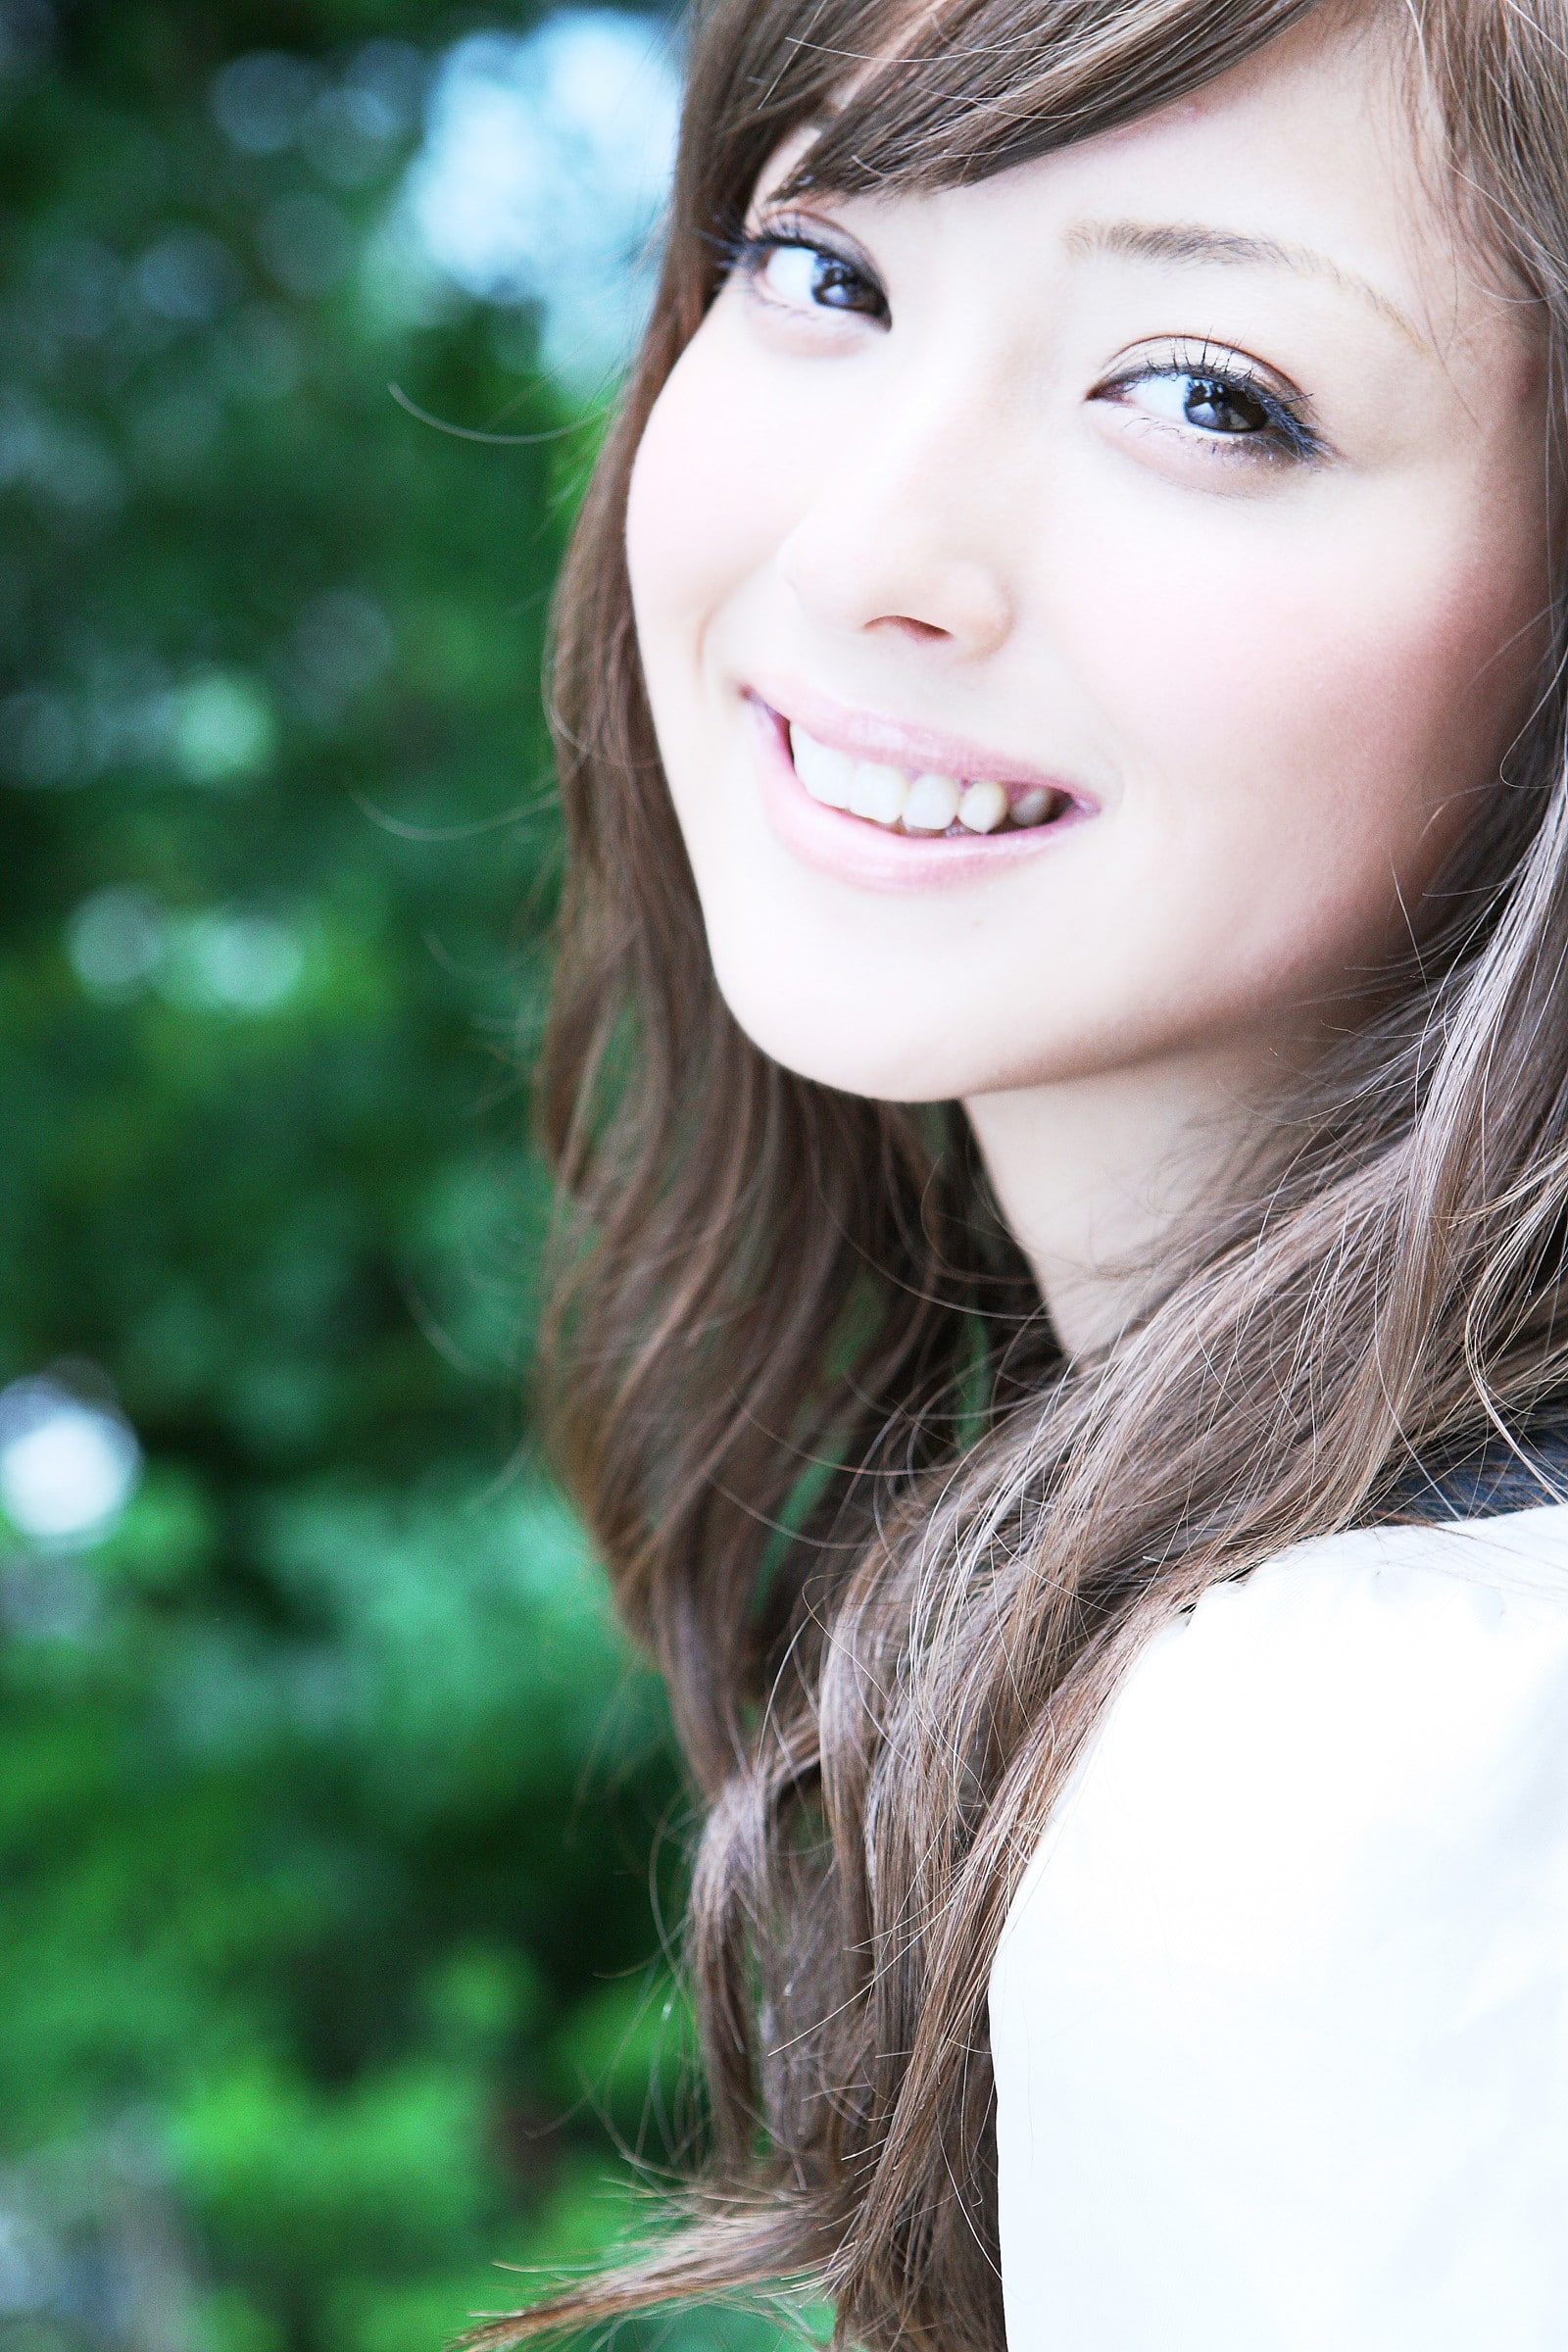 Sasaki Nozomi, model, Asian, Japanese, women, smiling, bright